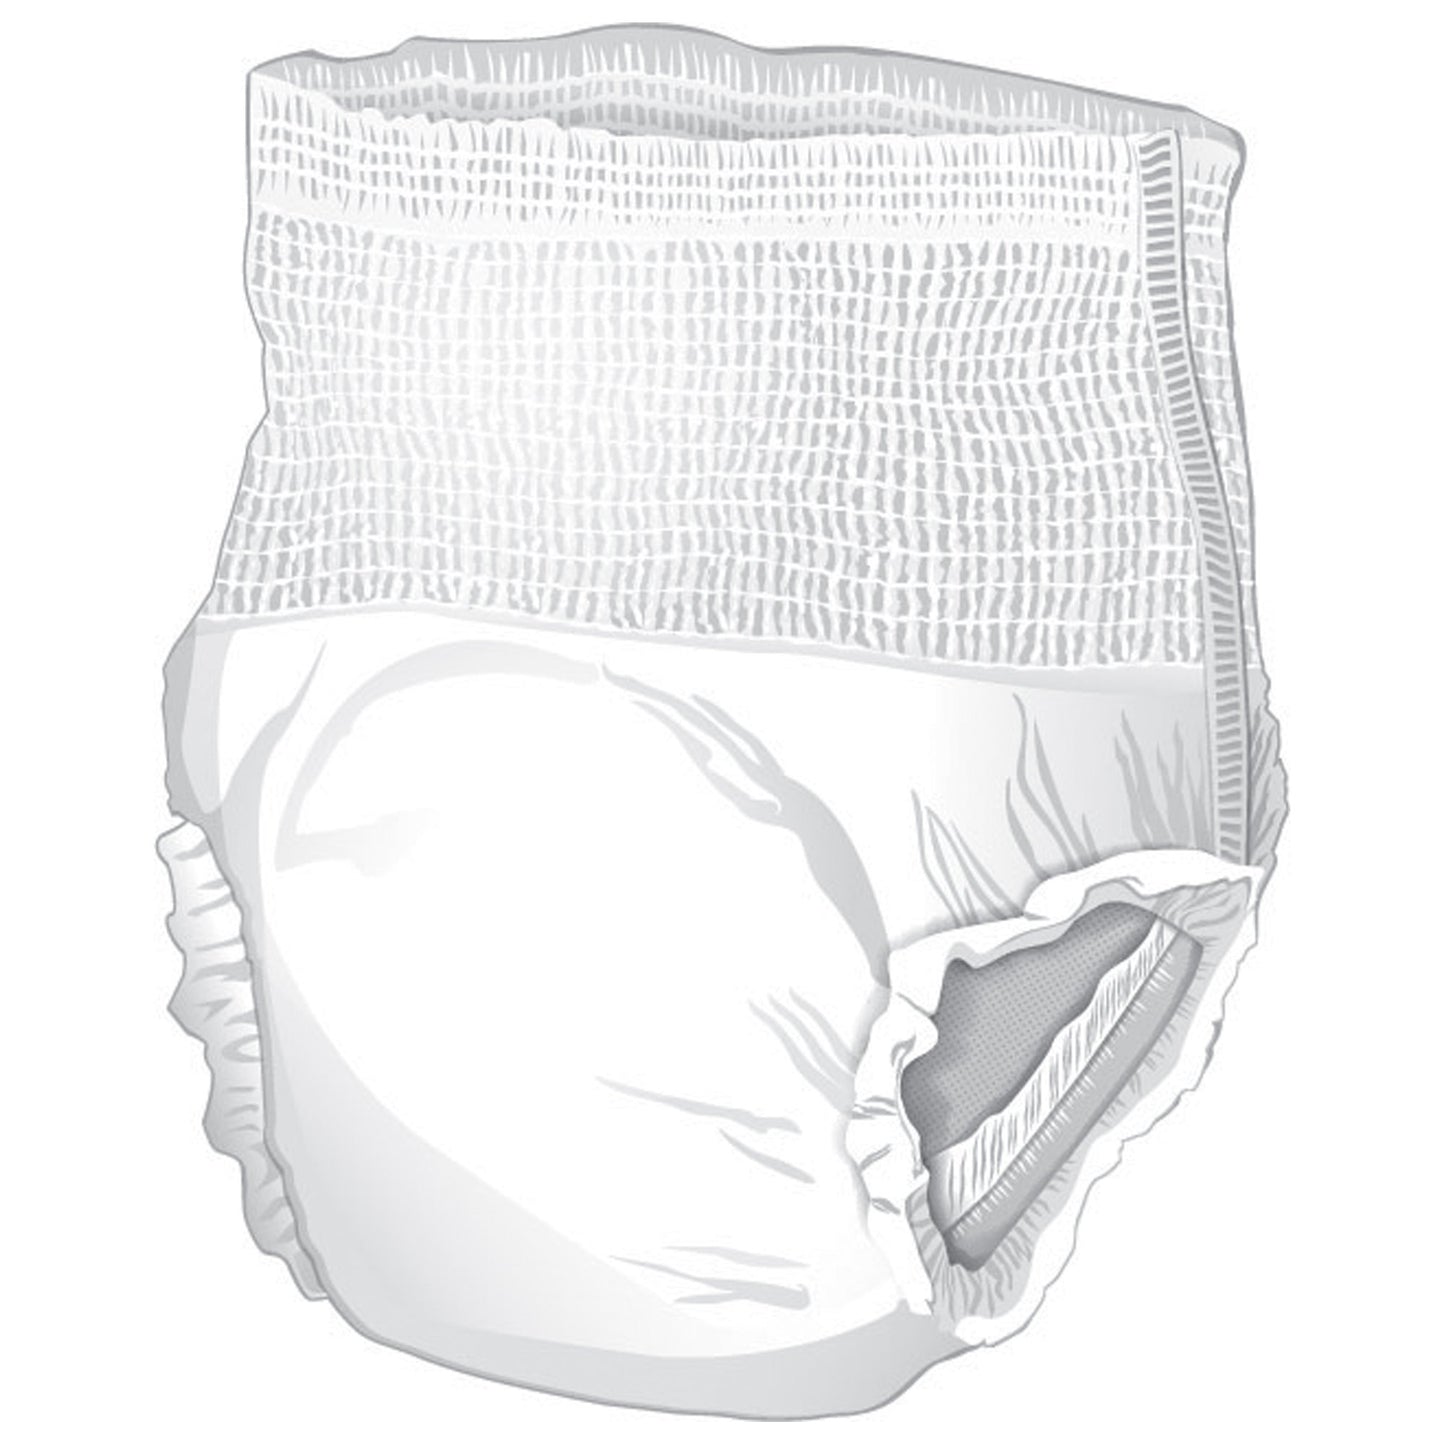 McKesson Ultimate Maximum Absorbent Underwear, XL, 56 ct